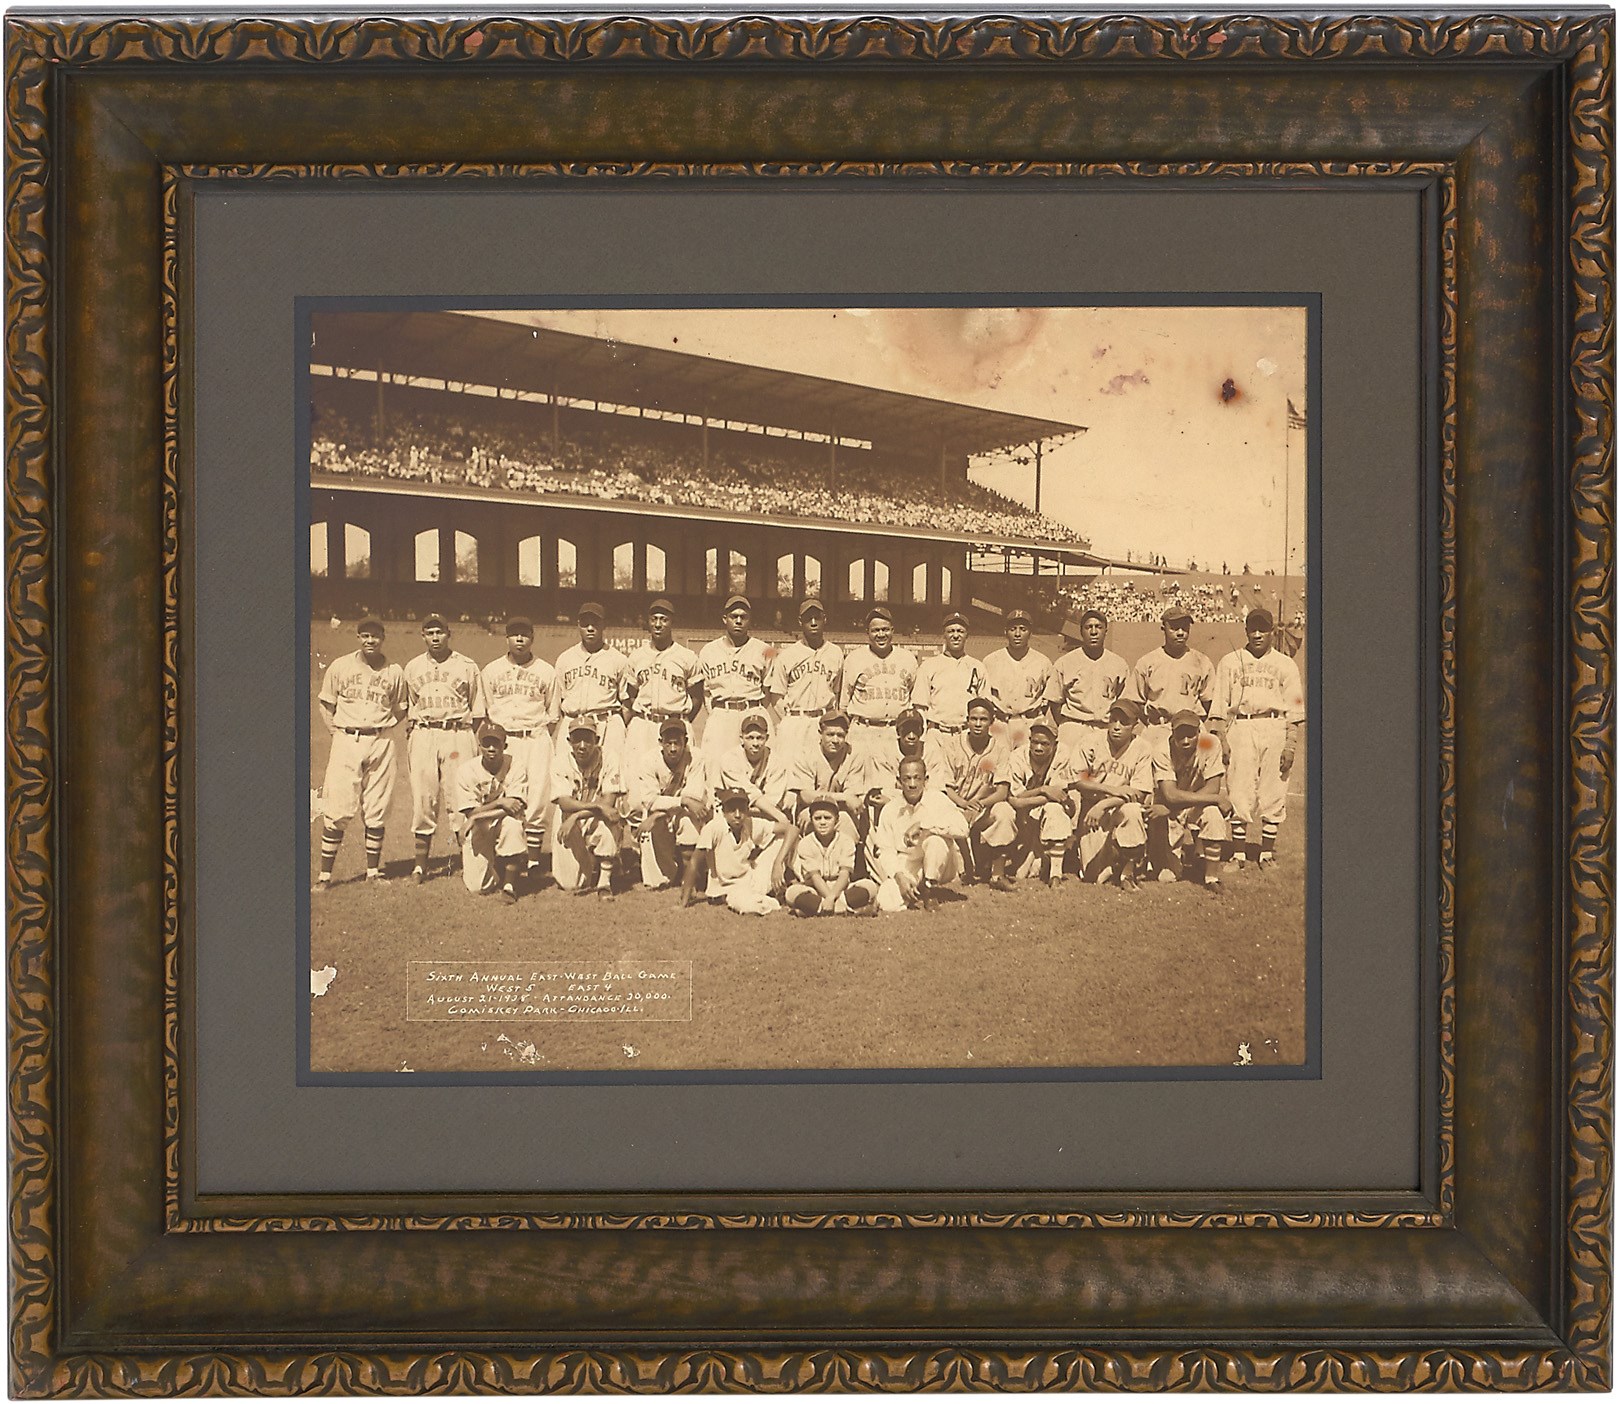 Negro League, Latin, Japanese & International Base - 1938 Negro League All-Star Game Oversized Photograph